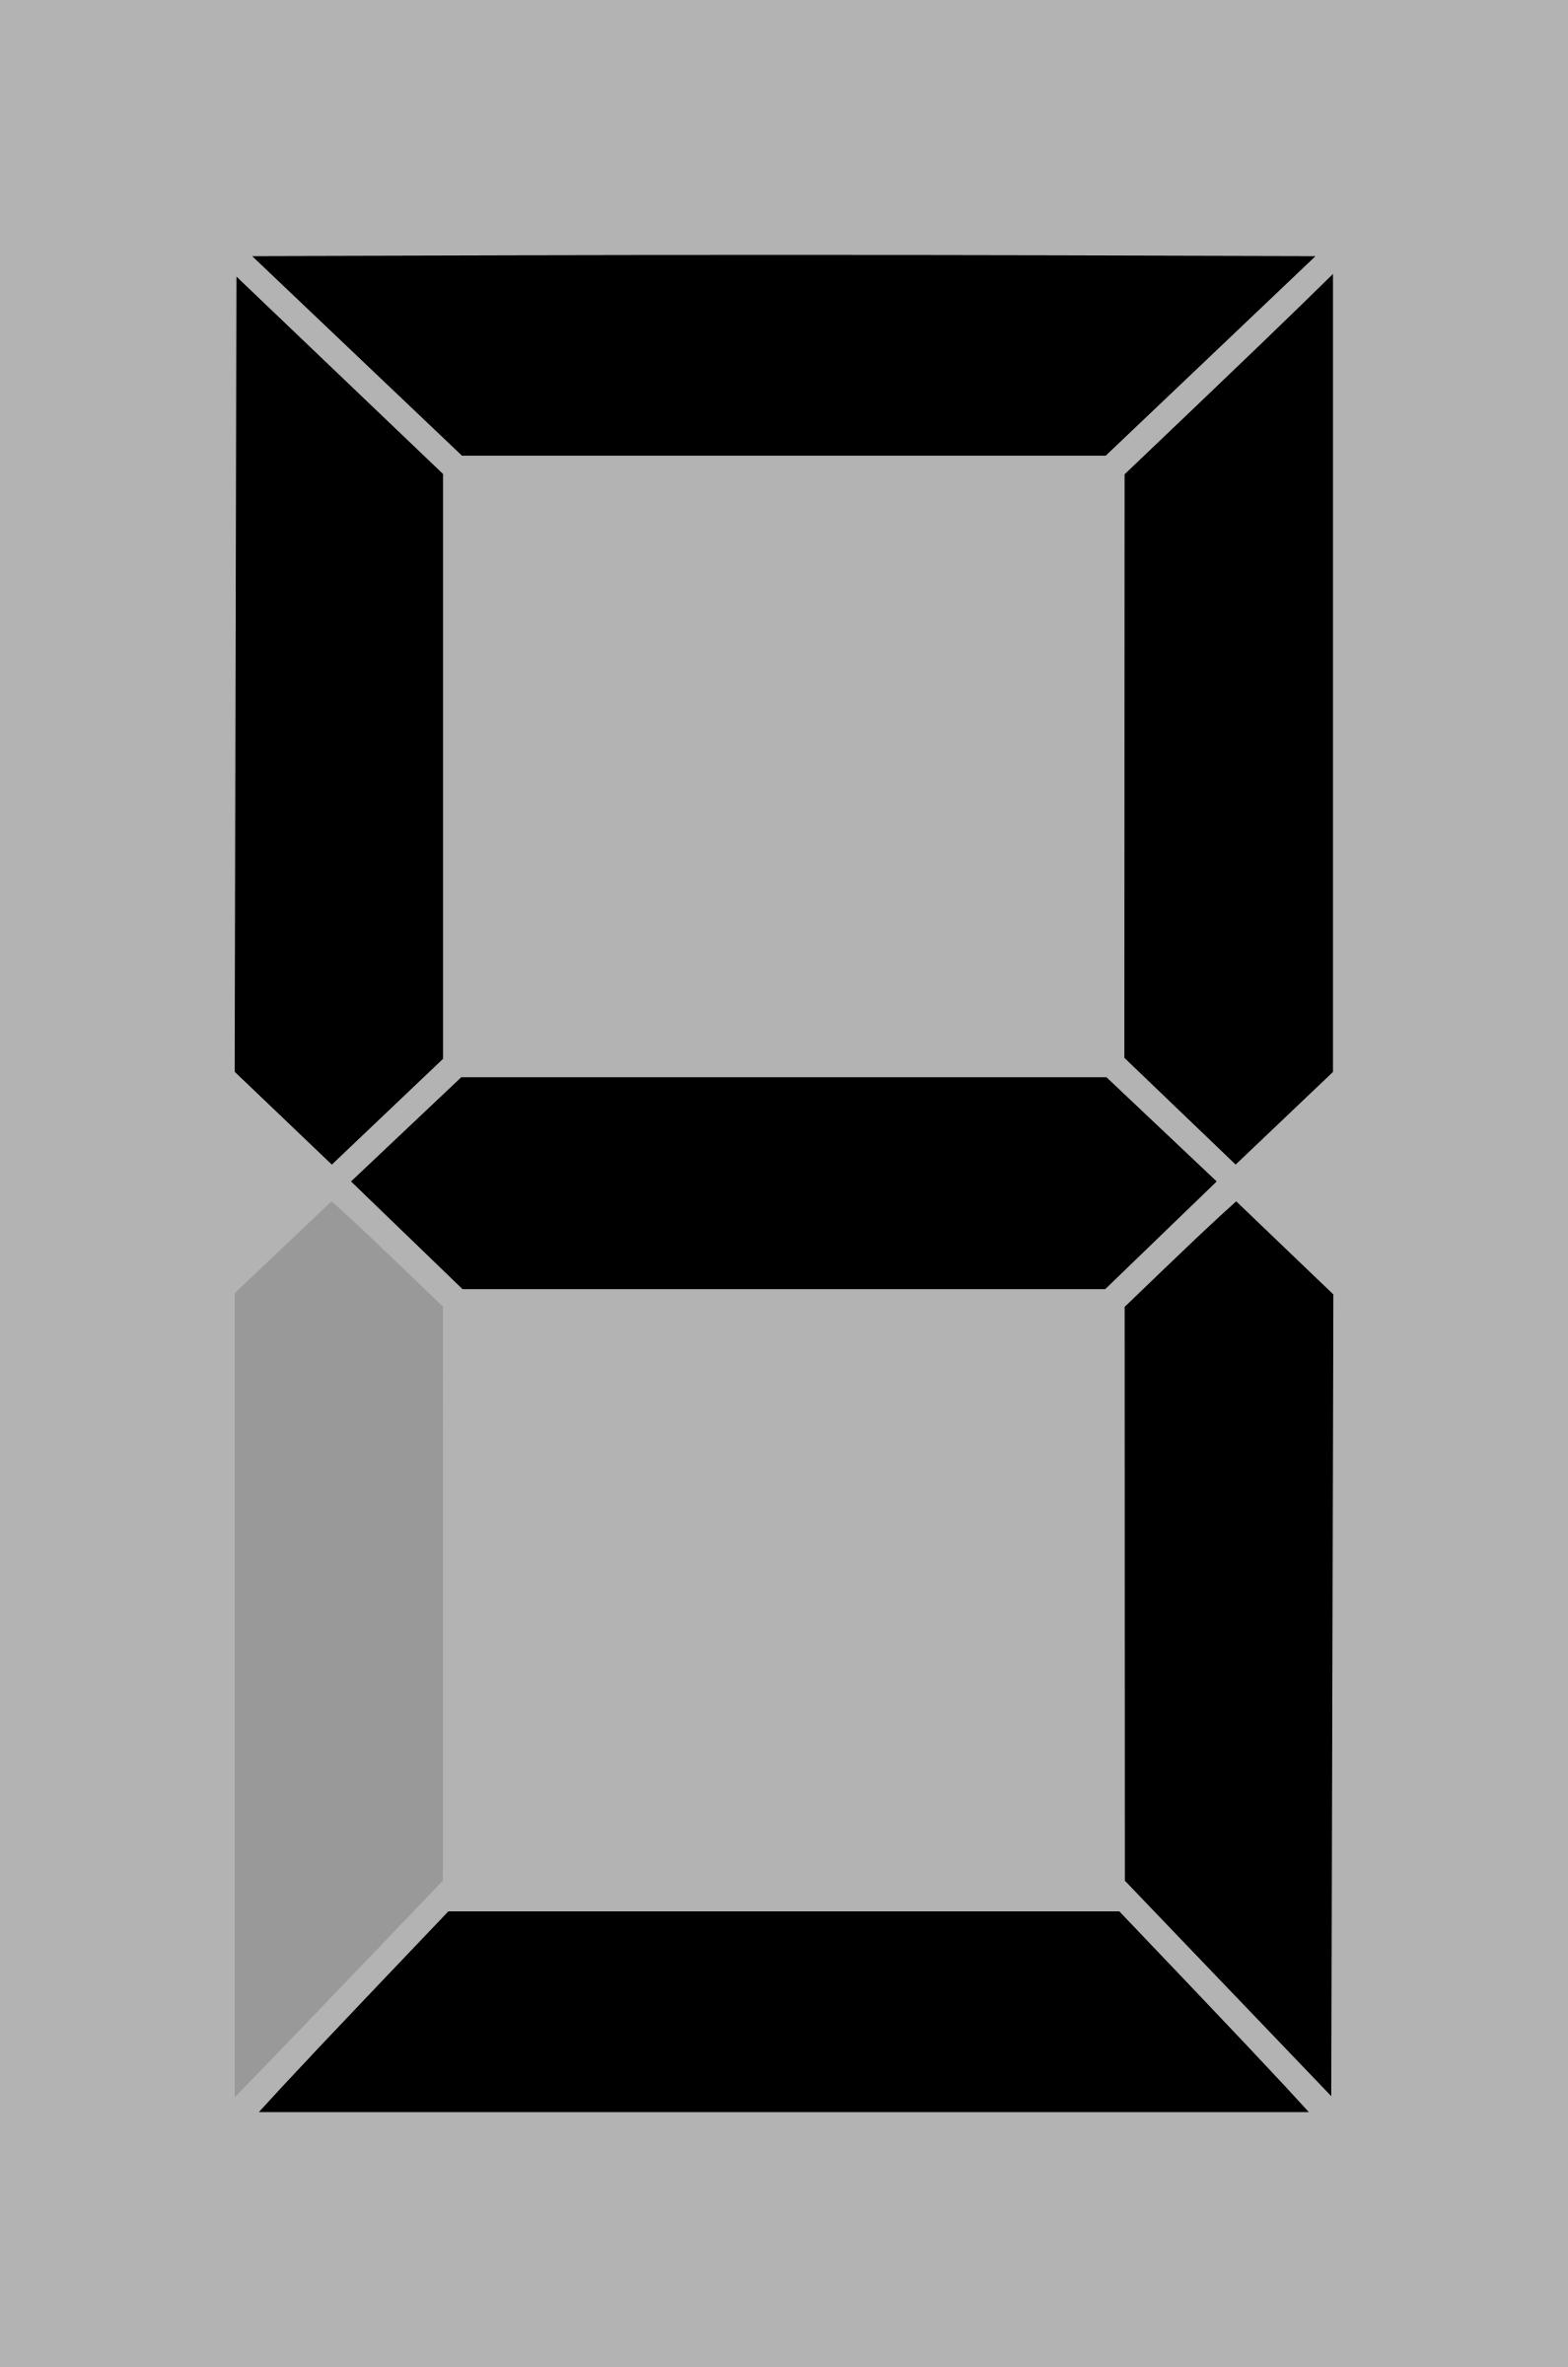 Seven segment display icons